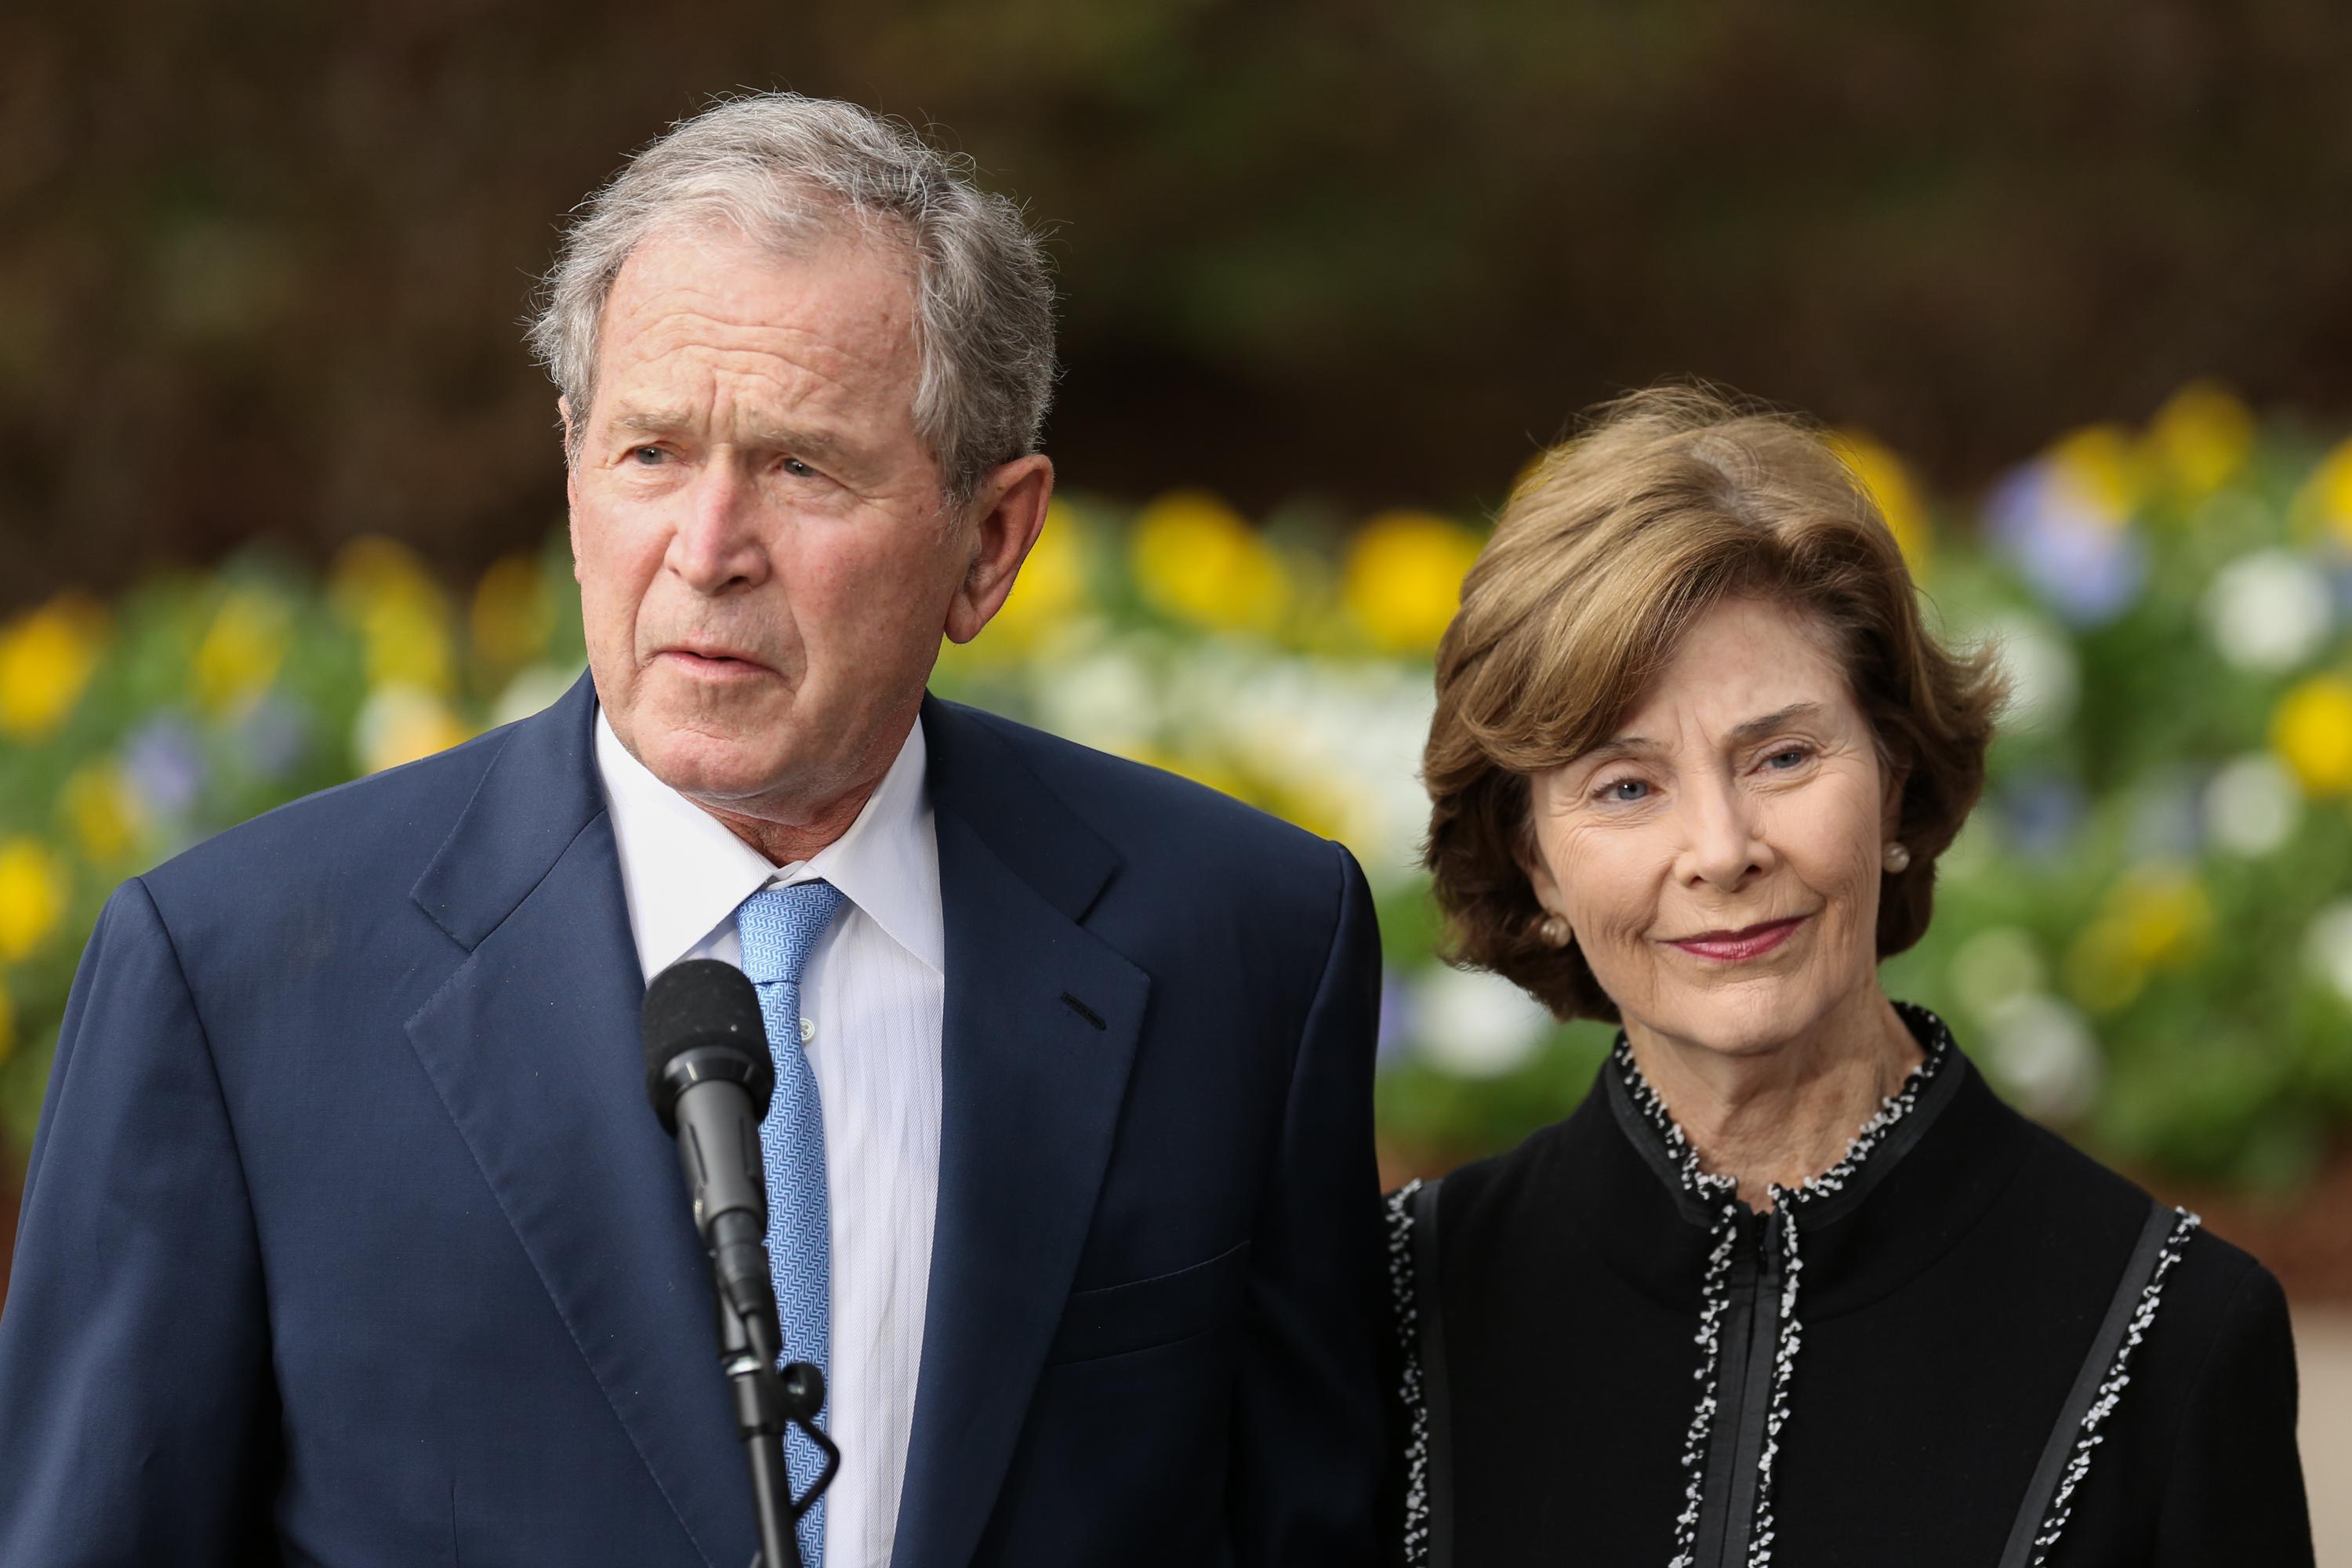 Former President George W. Bush and First Lady Laura Bush